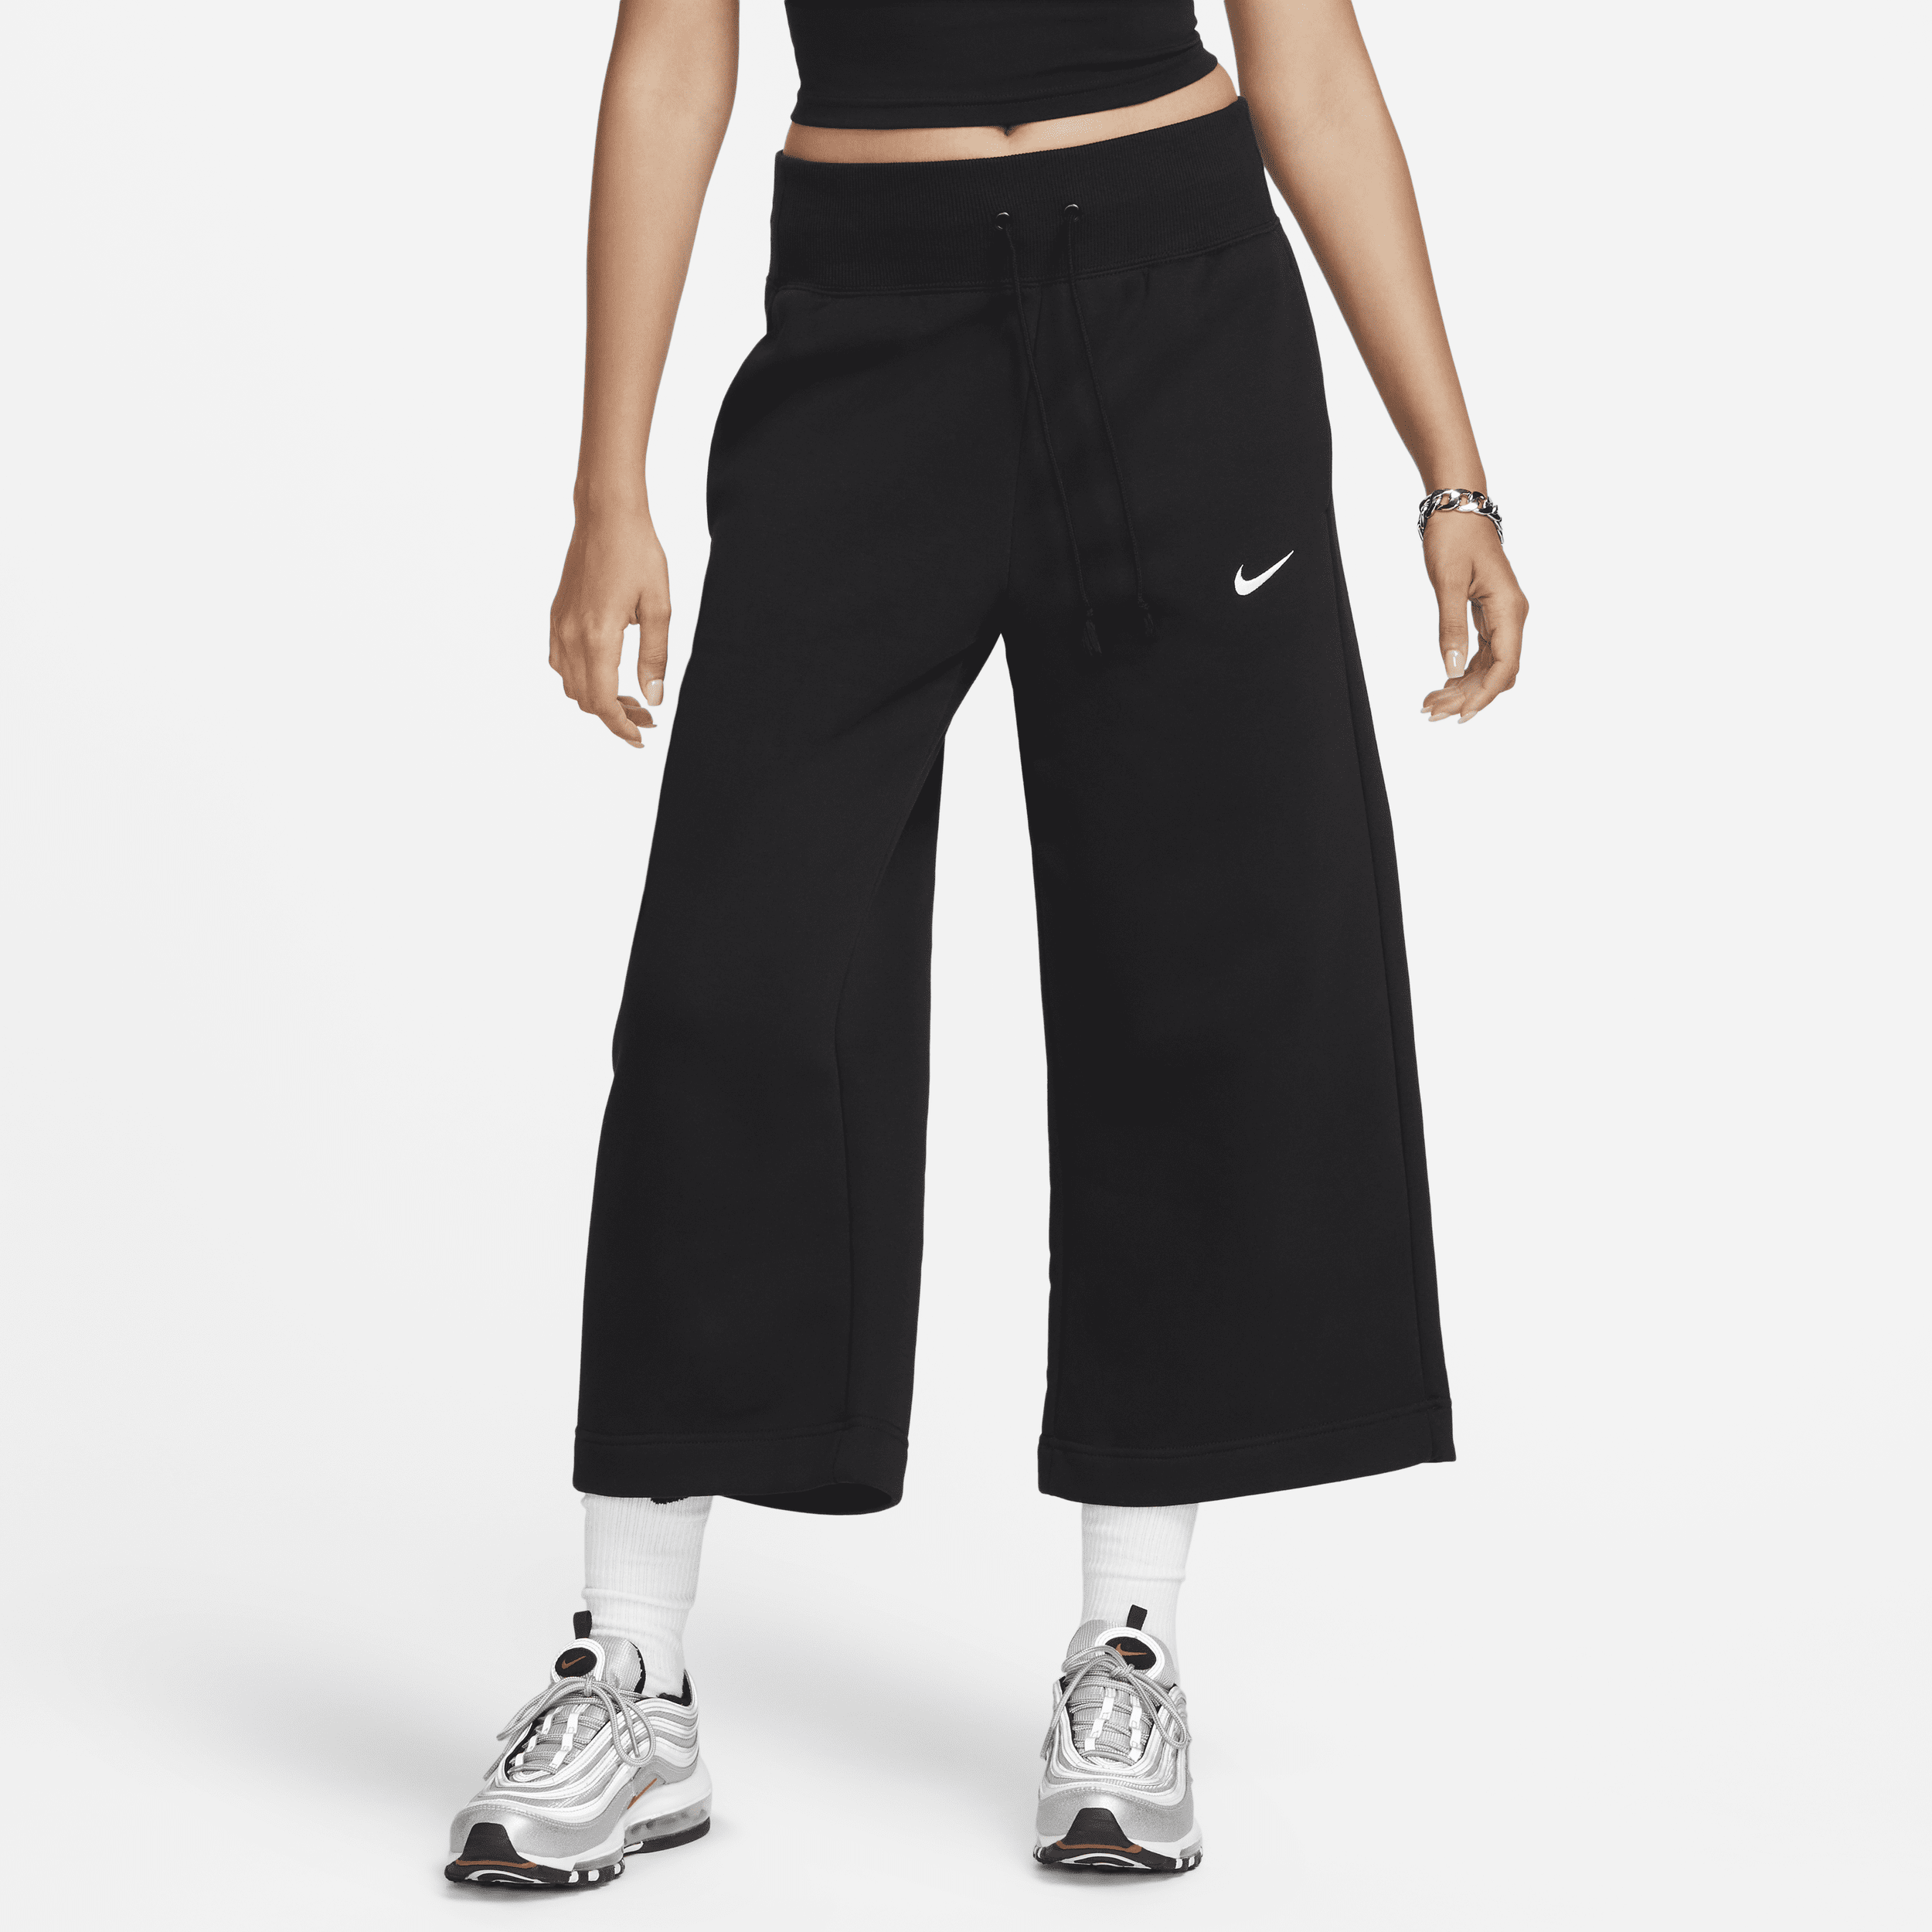 Korte Nike Sportswear Phoenix Fleece-sweatpants med høj talje til kvinder - sort